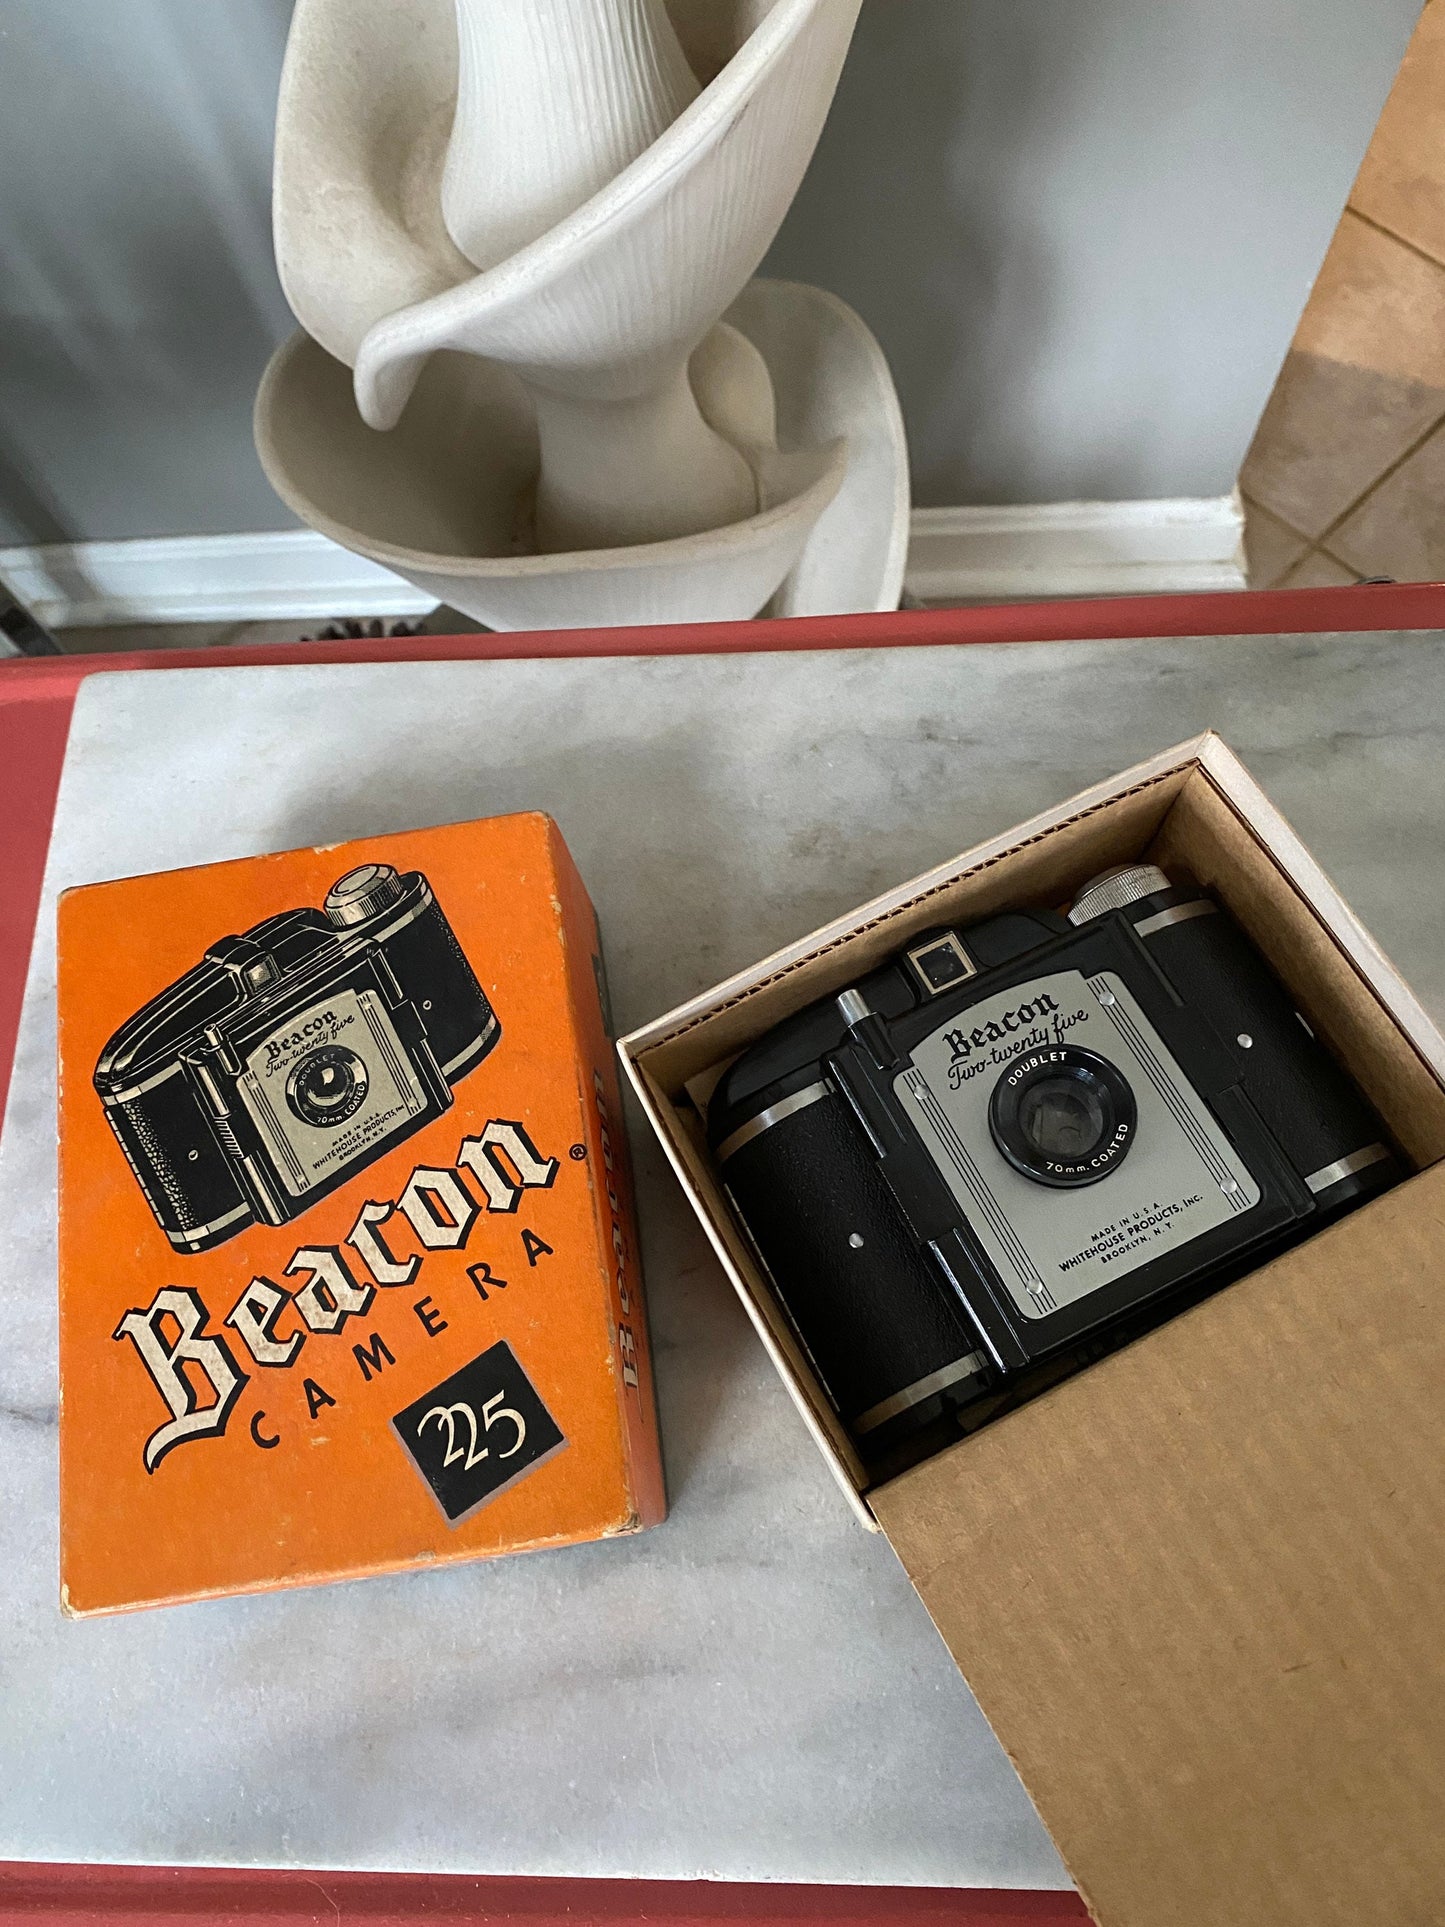 1950’s Beacon Two Twenty Five Film Camera | In Original Bix | Vintage Beacon Bakelite Camera